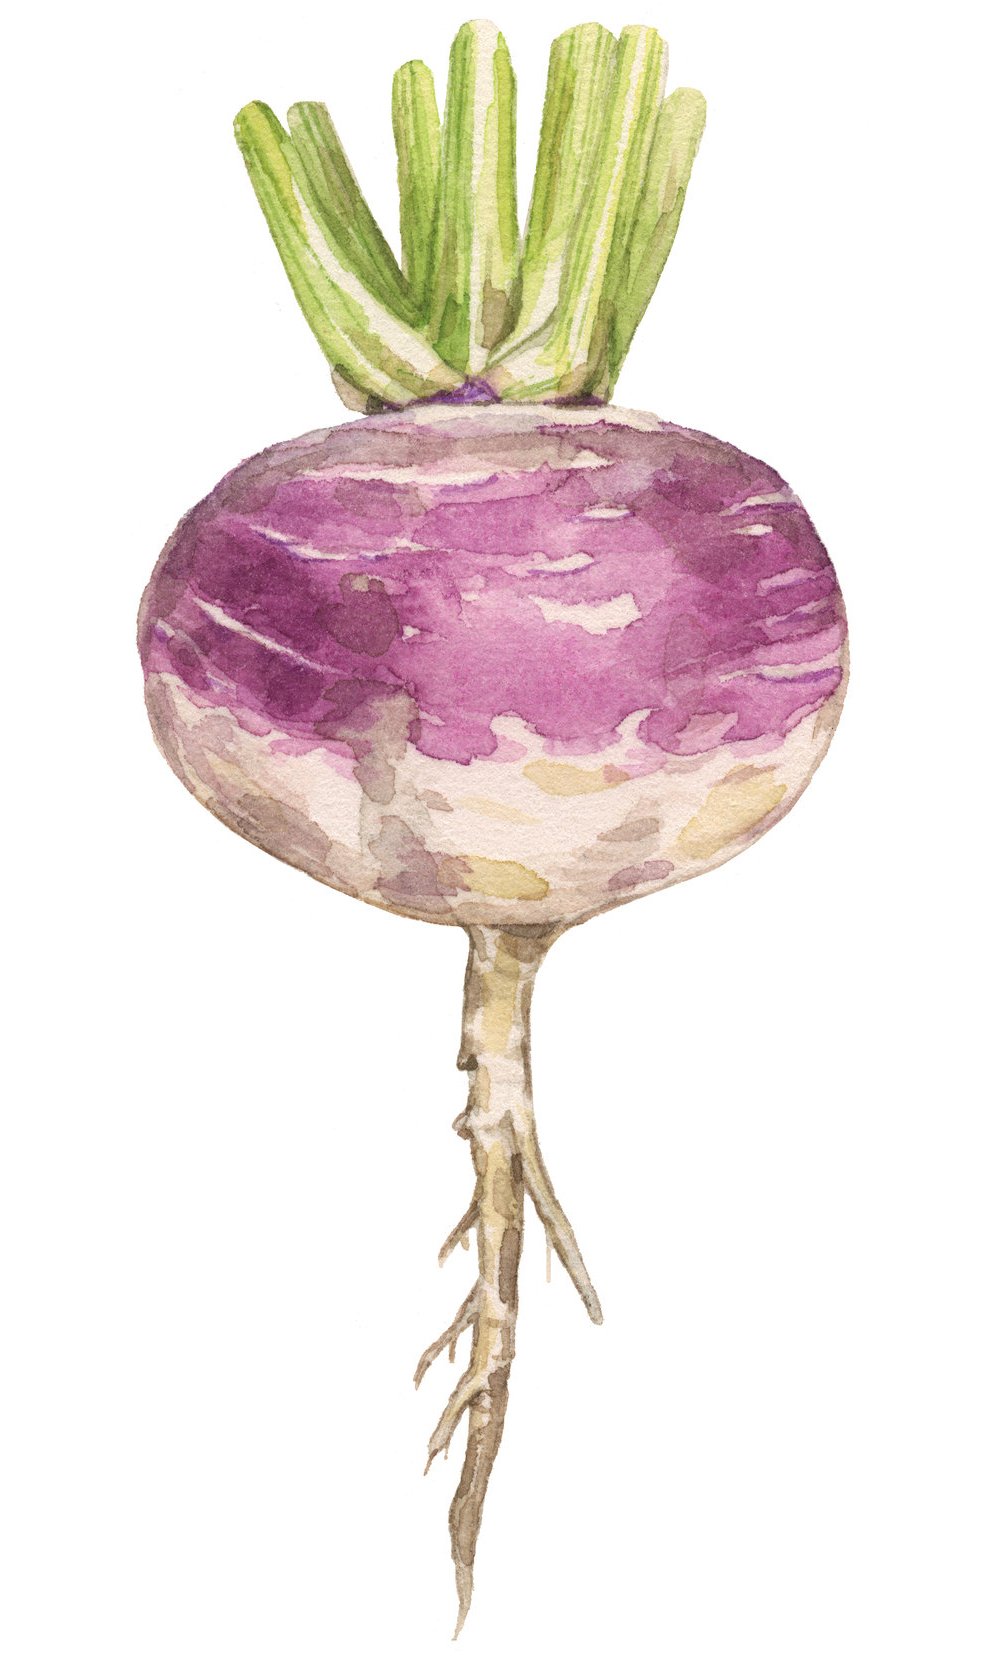 39-late-turnip-lrg.jpg